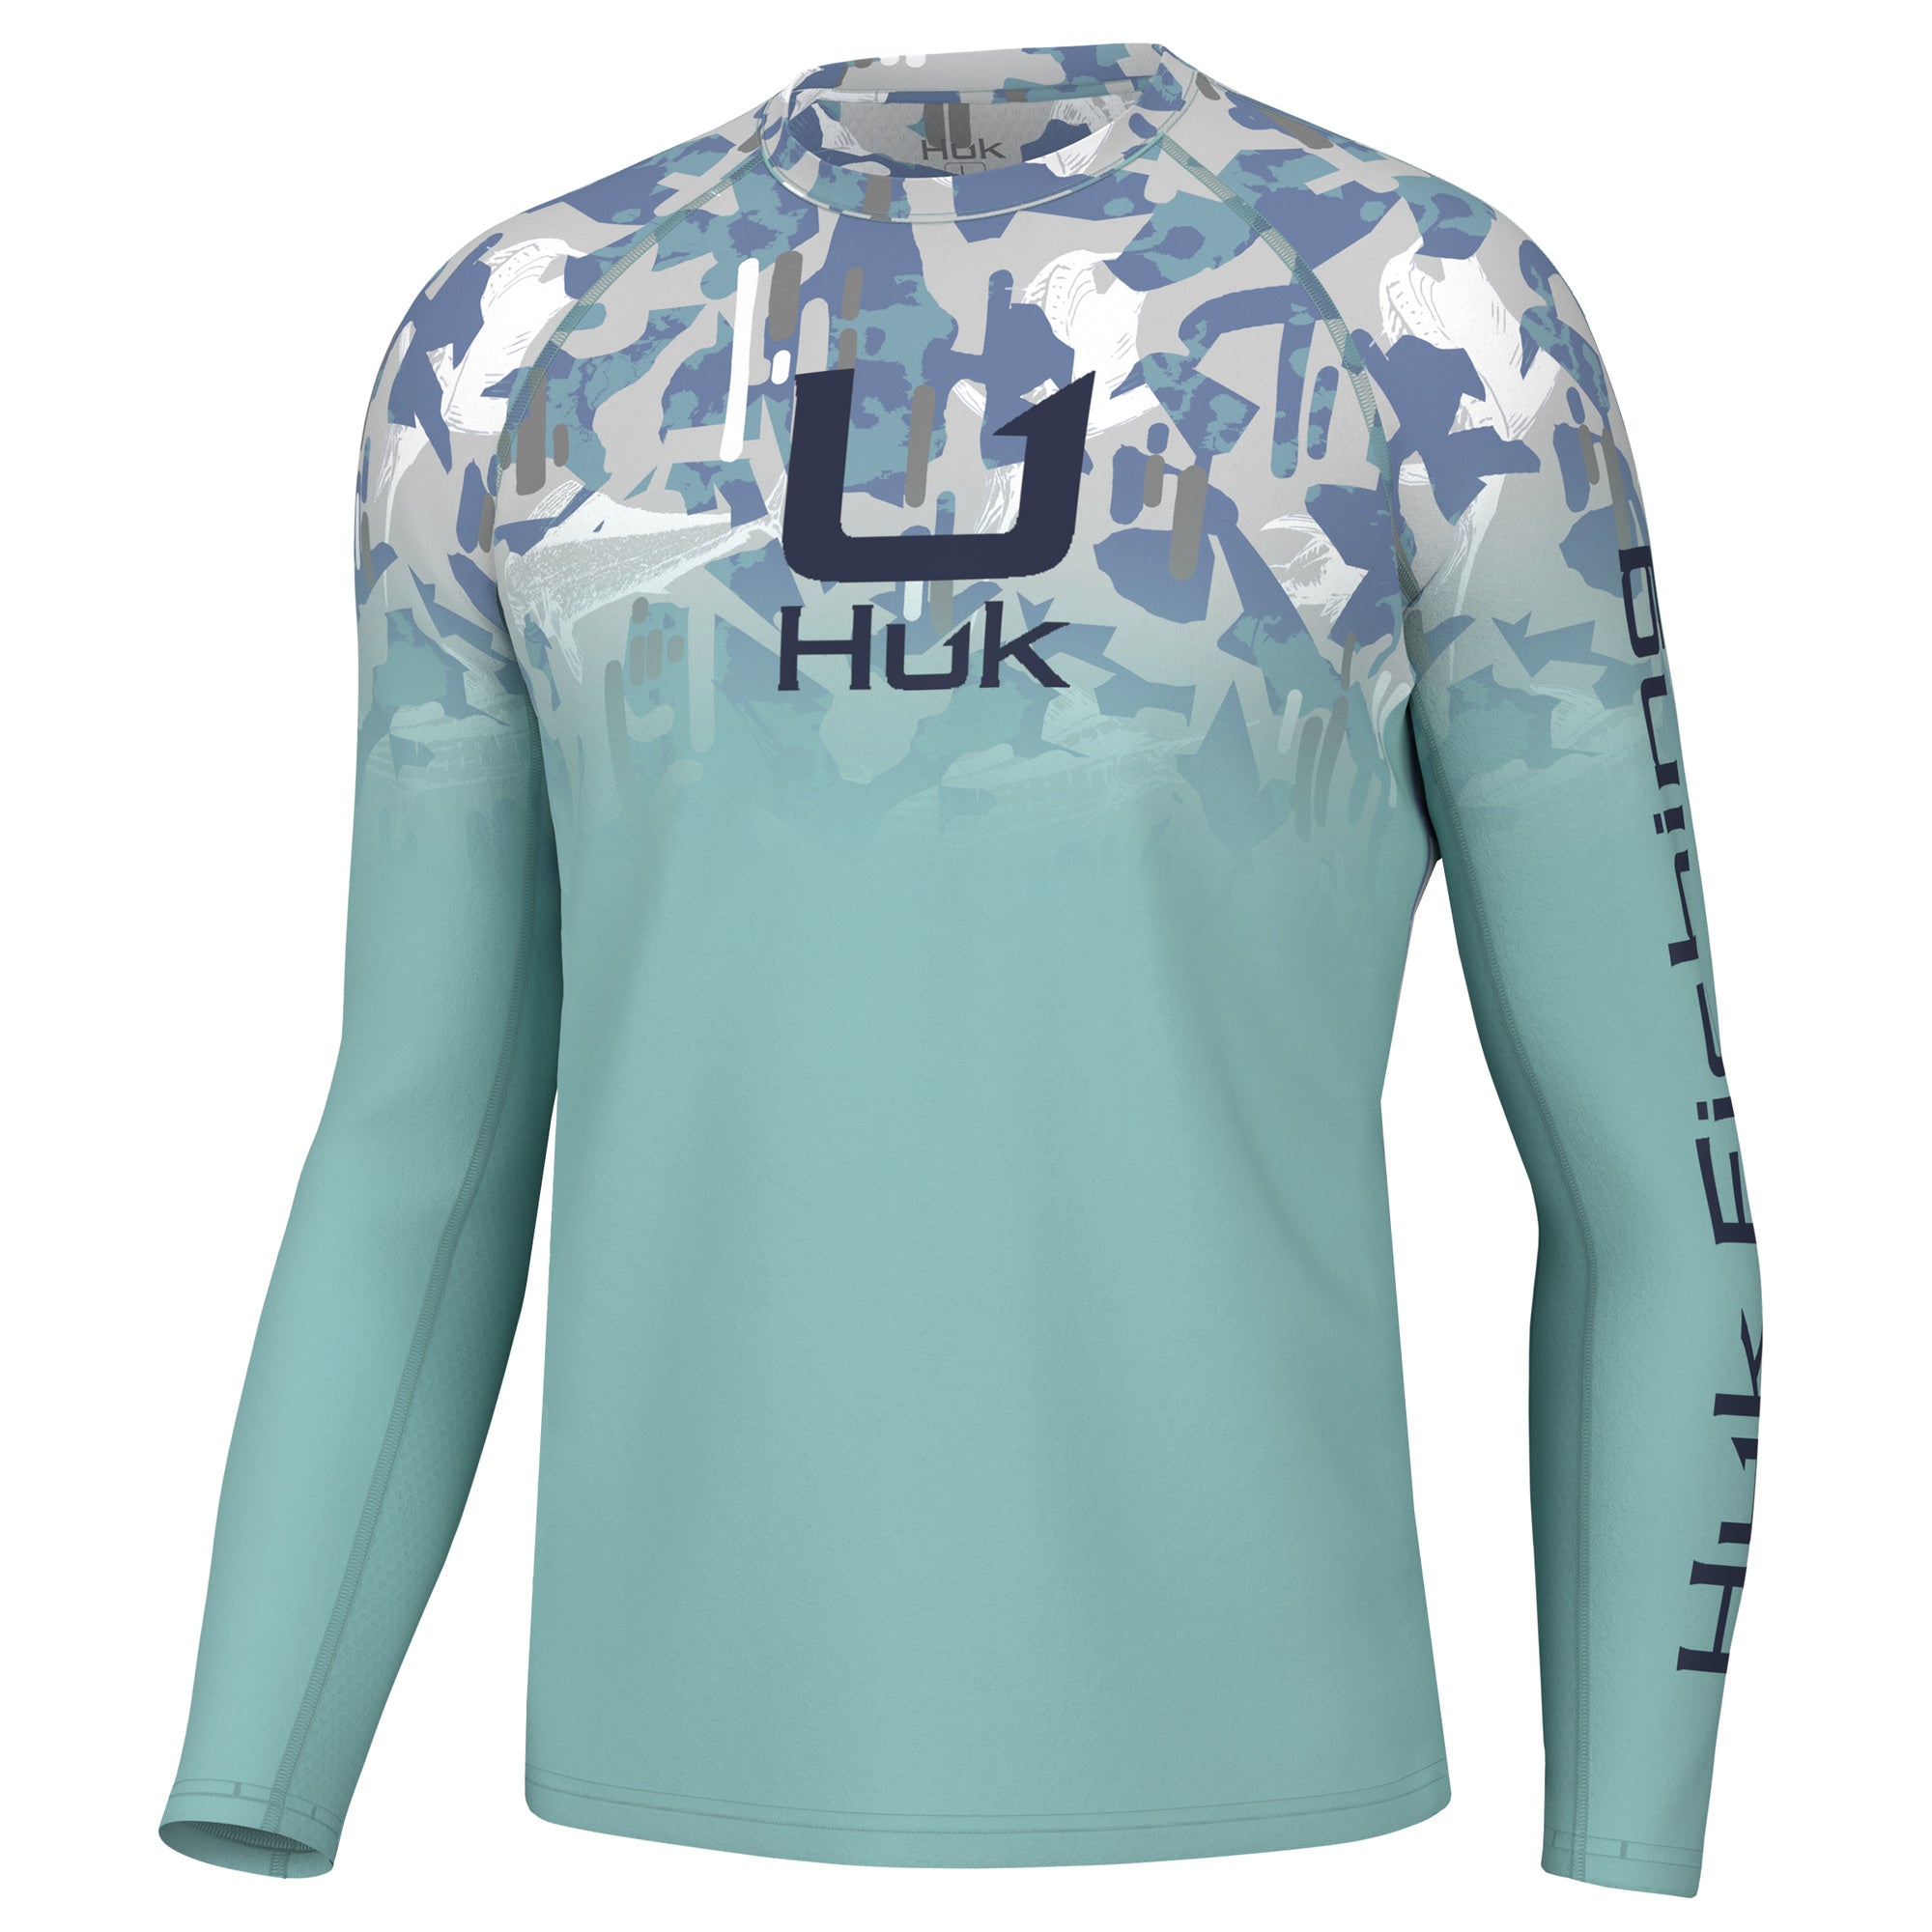 Huk Long Sleeve Shirt - Icon X, Fishing, Refraction, Camo